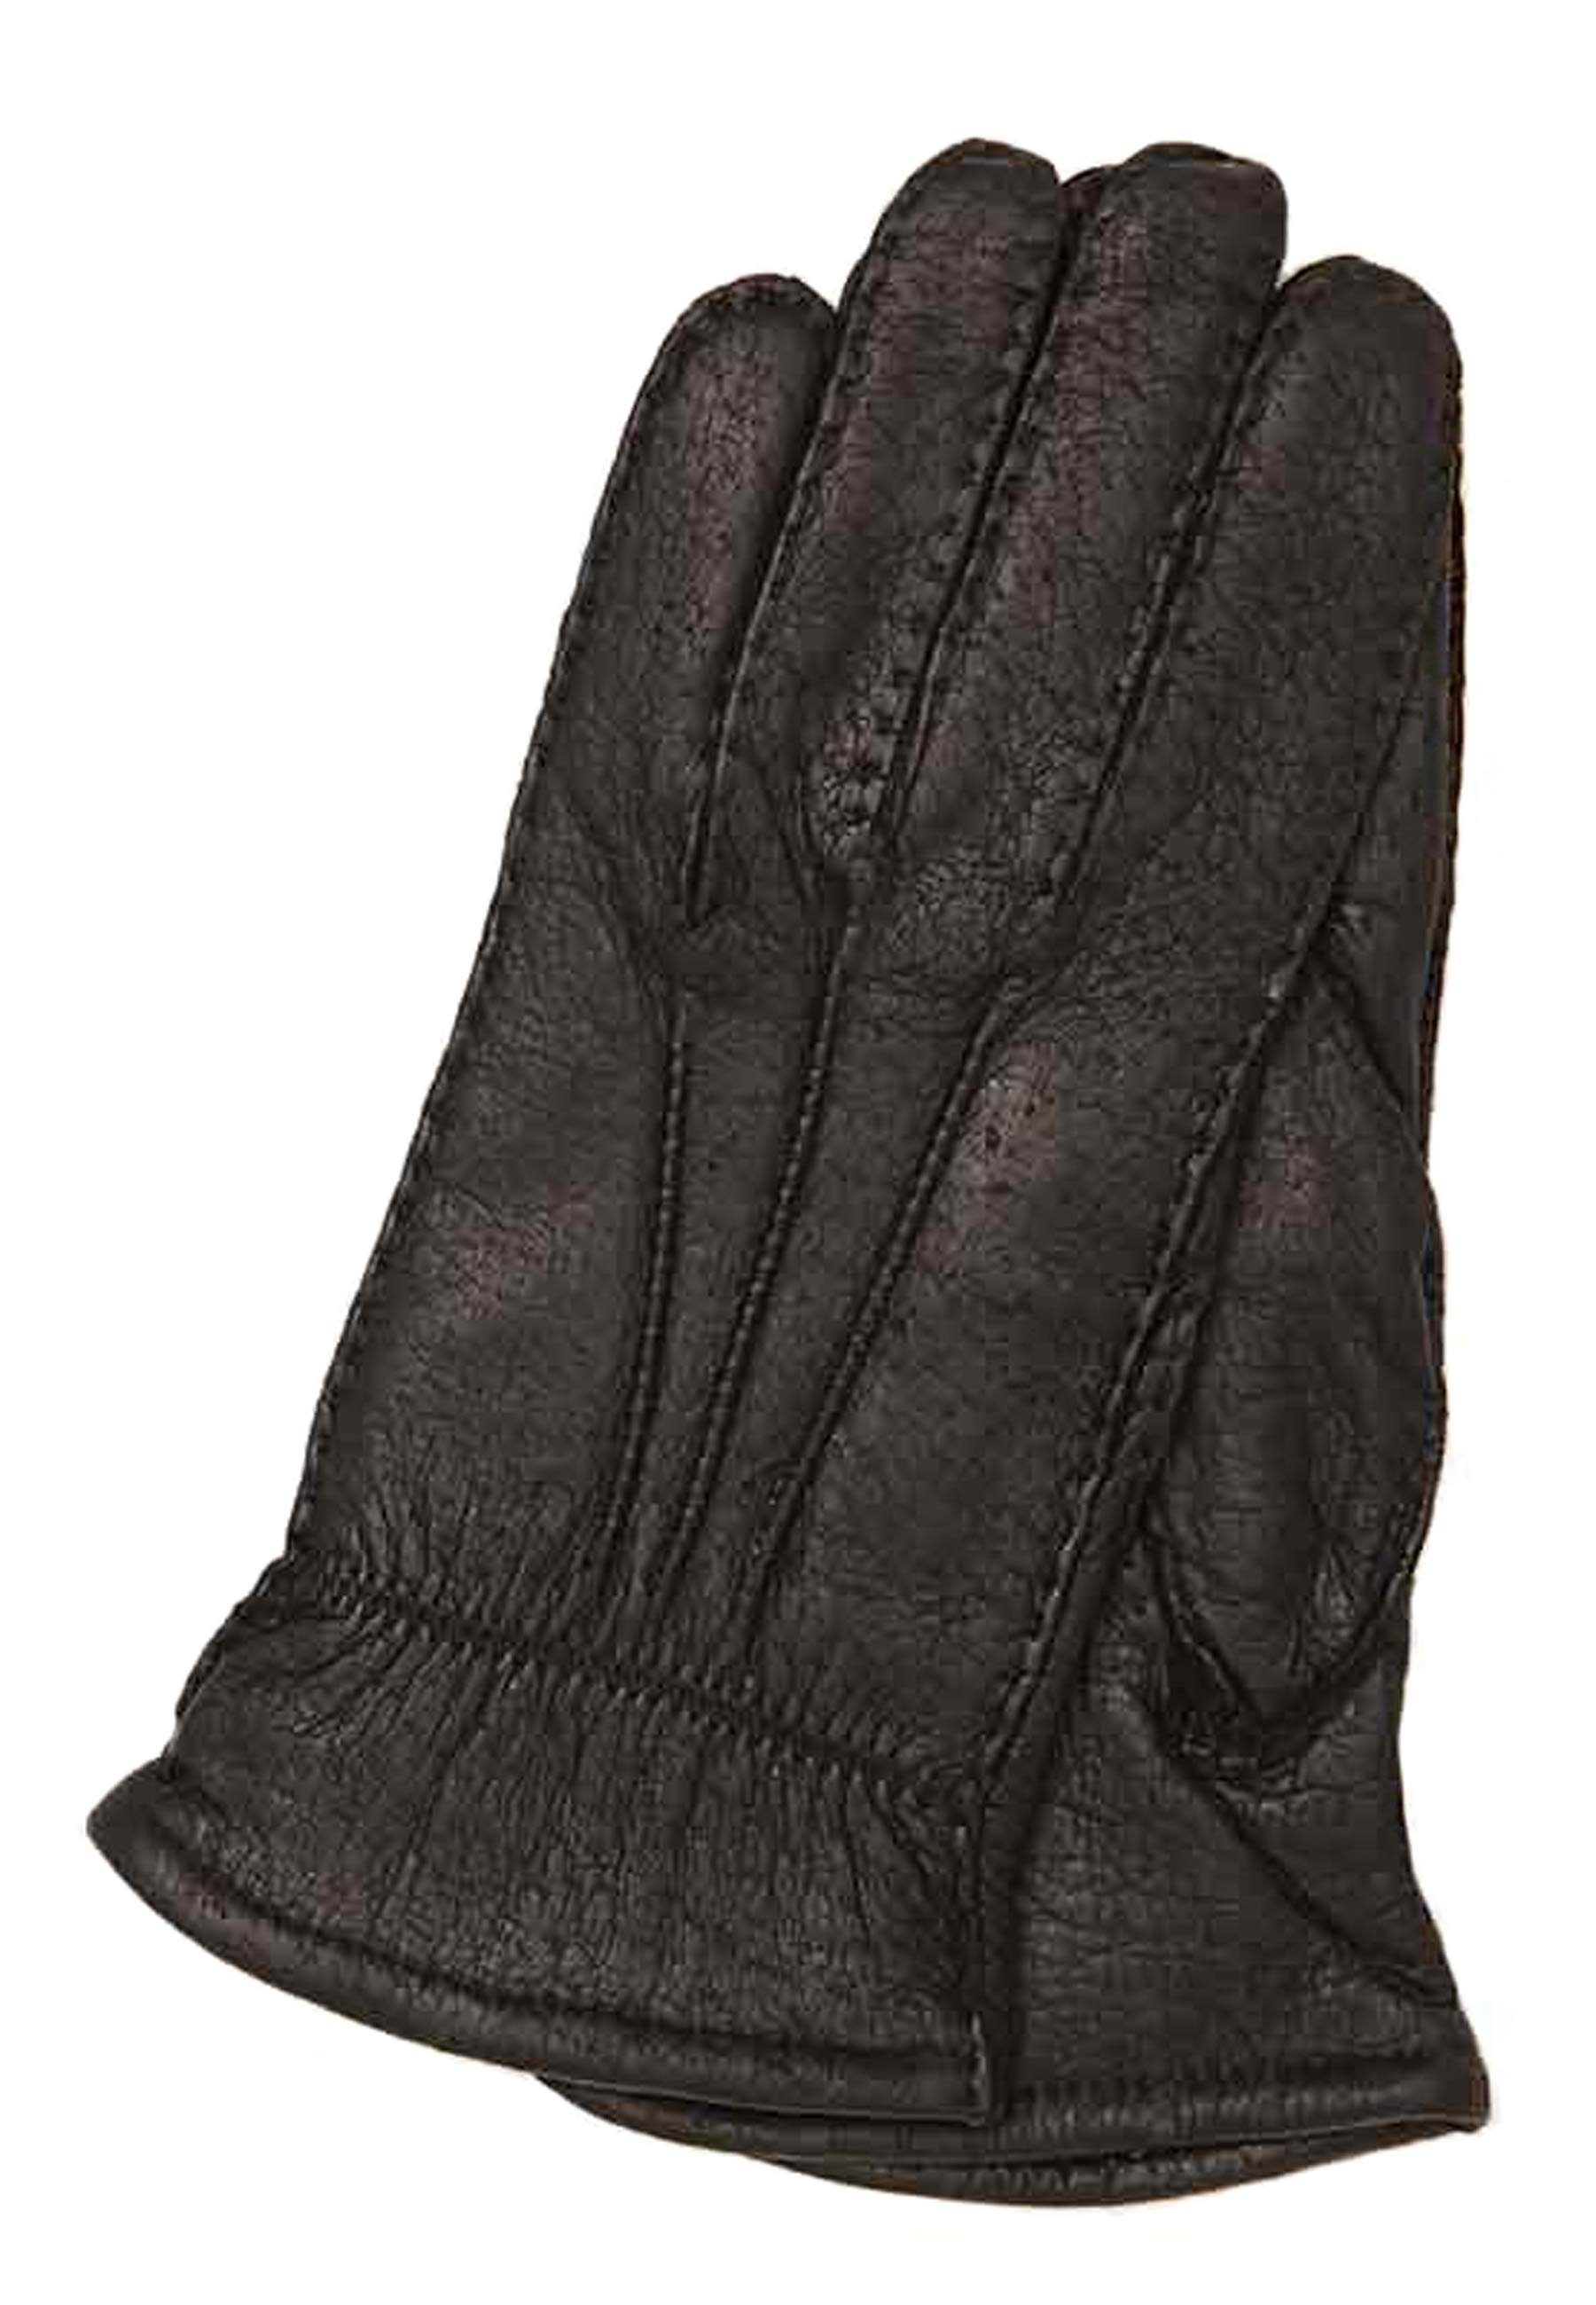 GRETCHEN Lederhandschuhe Peccary-Leder echtem schwarz aus